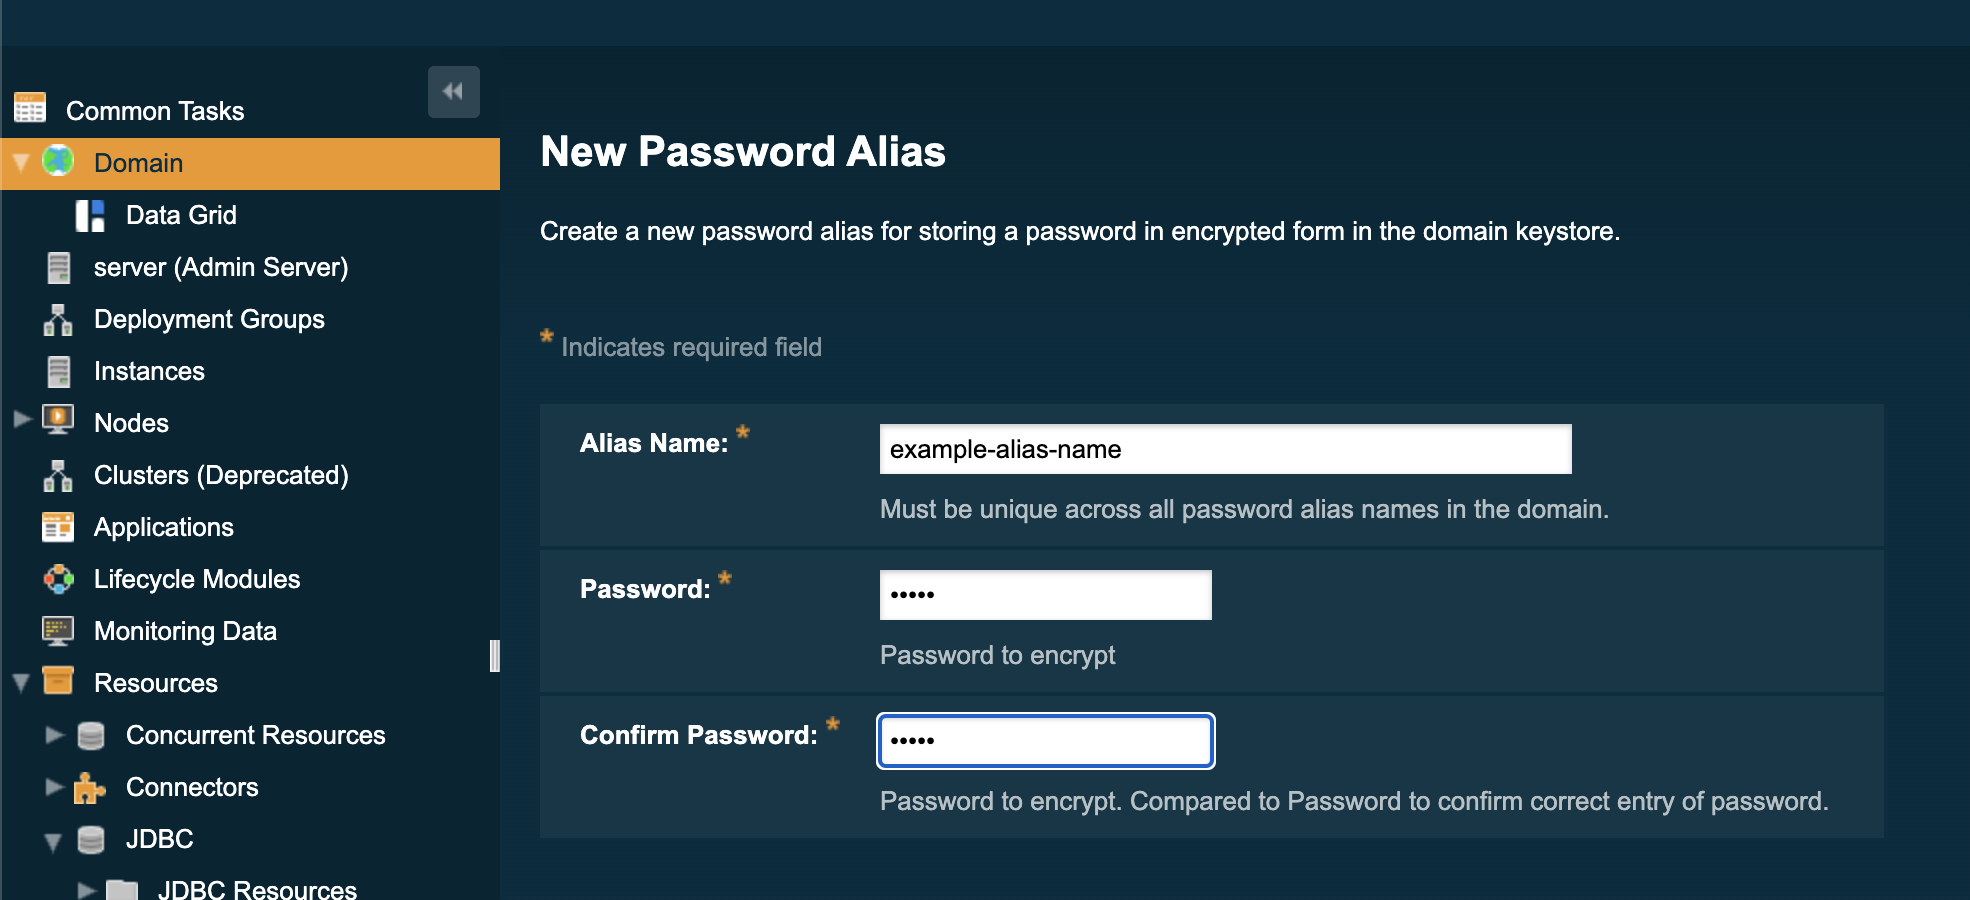 Password alias creation